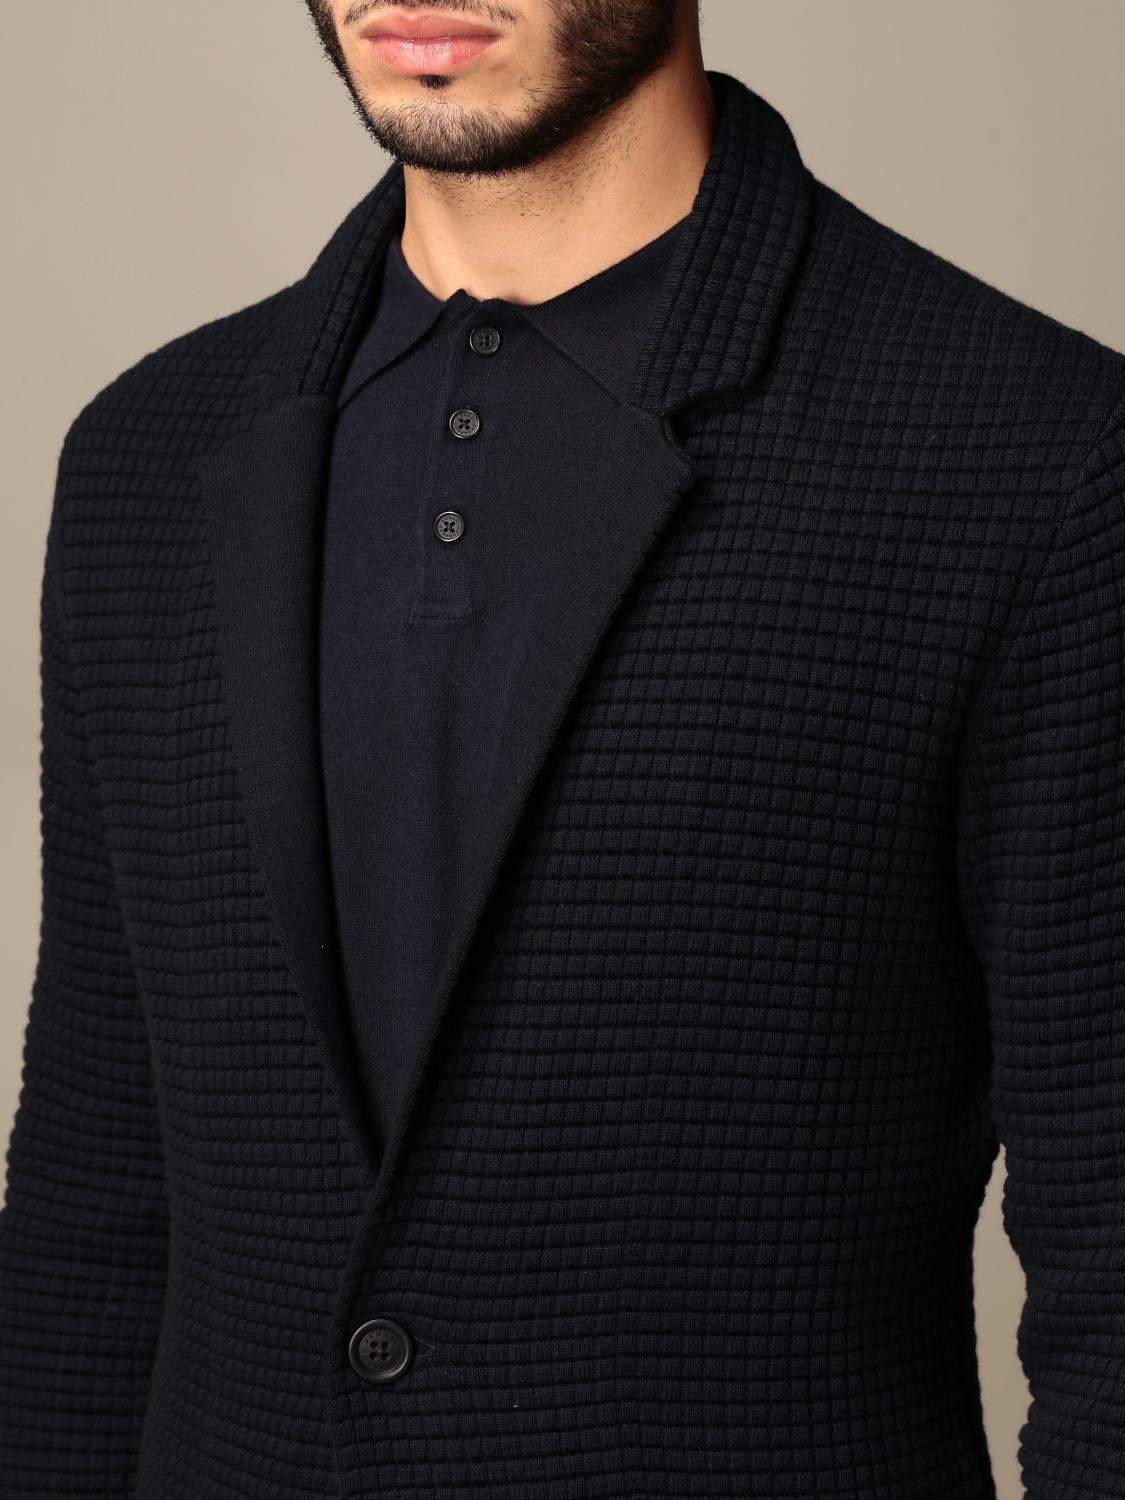 ARMANI EXCHANGE: Single-breasted jacket in knit - Navy | Armani Exchange  blazer 6HZG1B ZMU5Z online on 